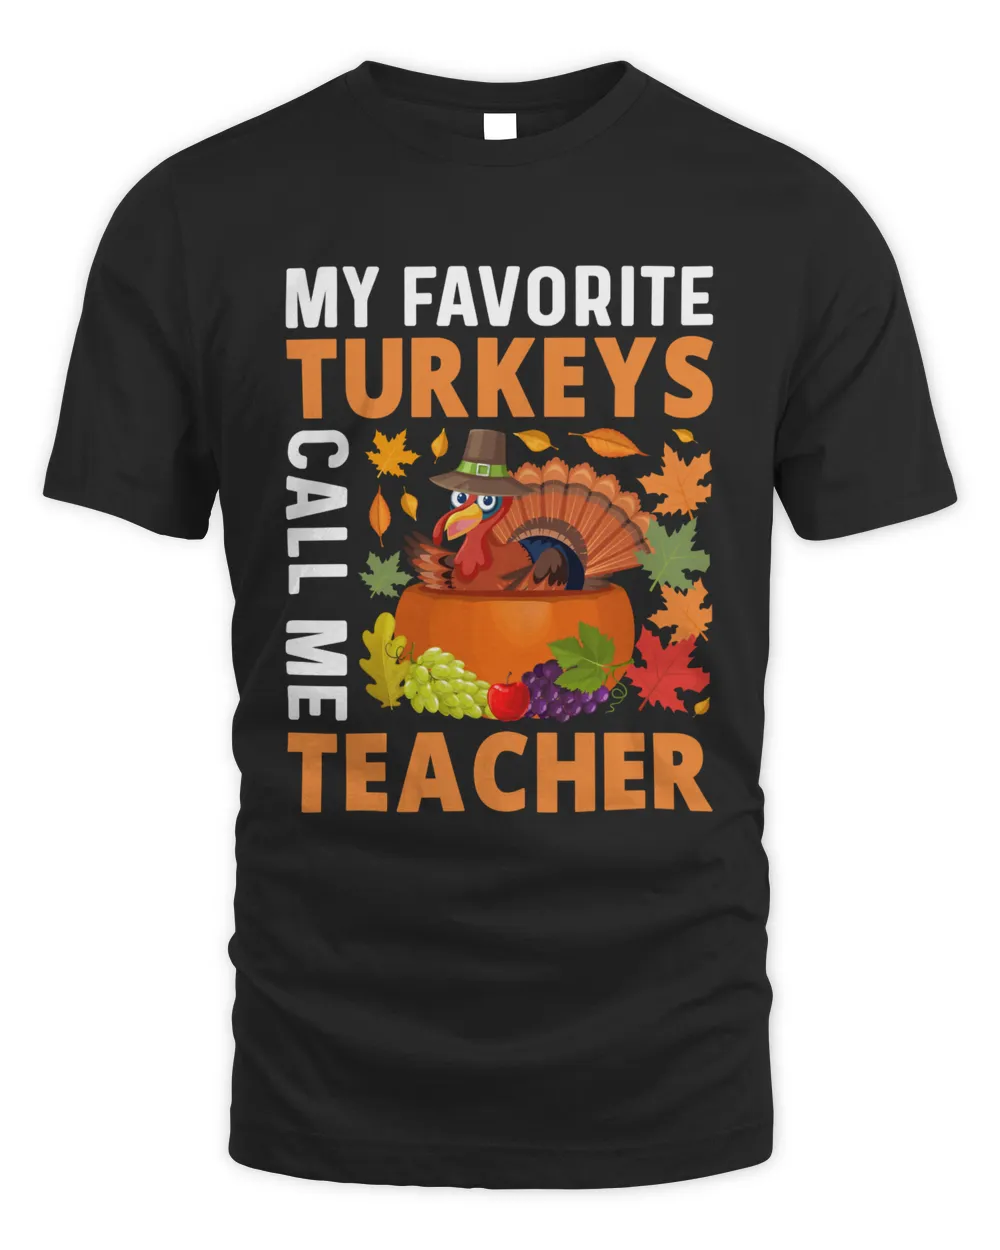 My favorite turkeys call me teacher